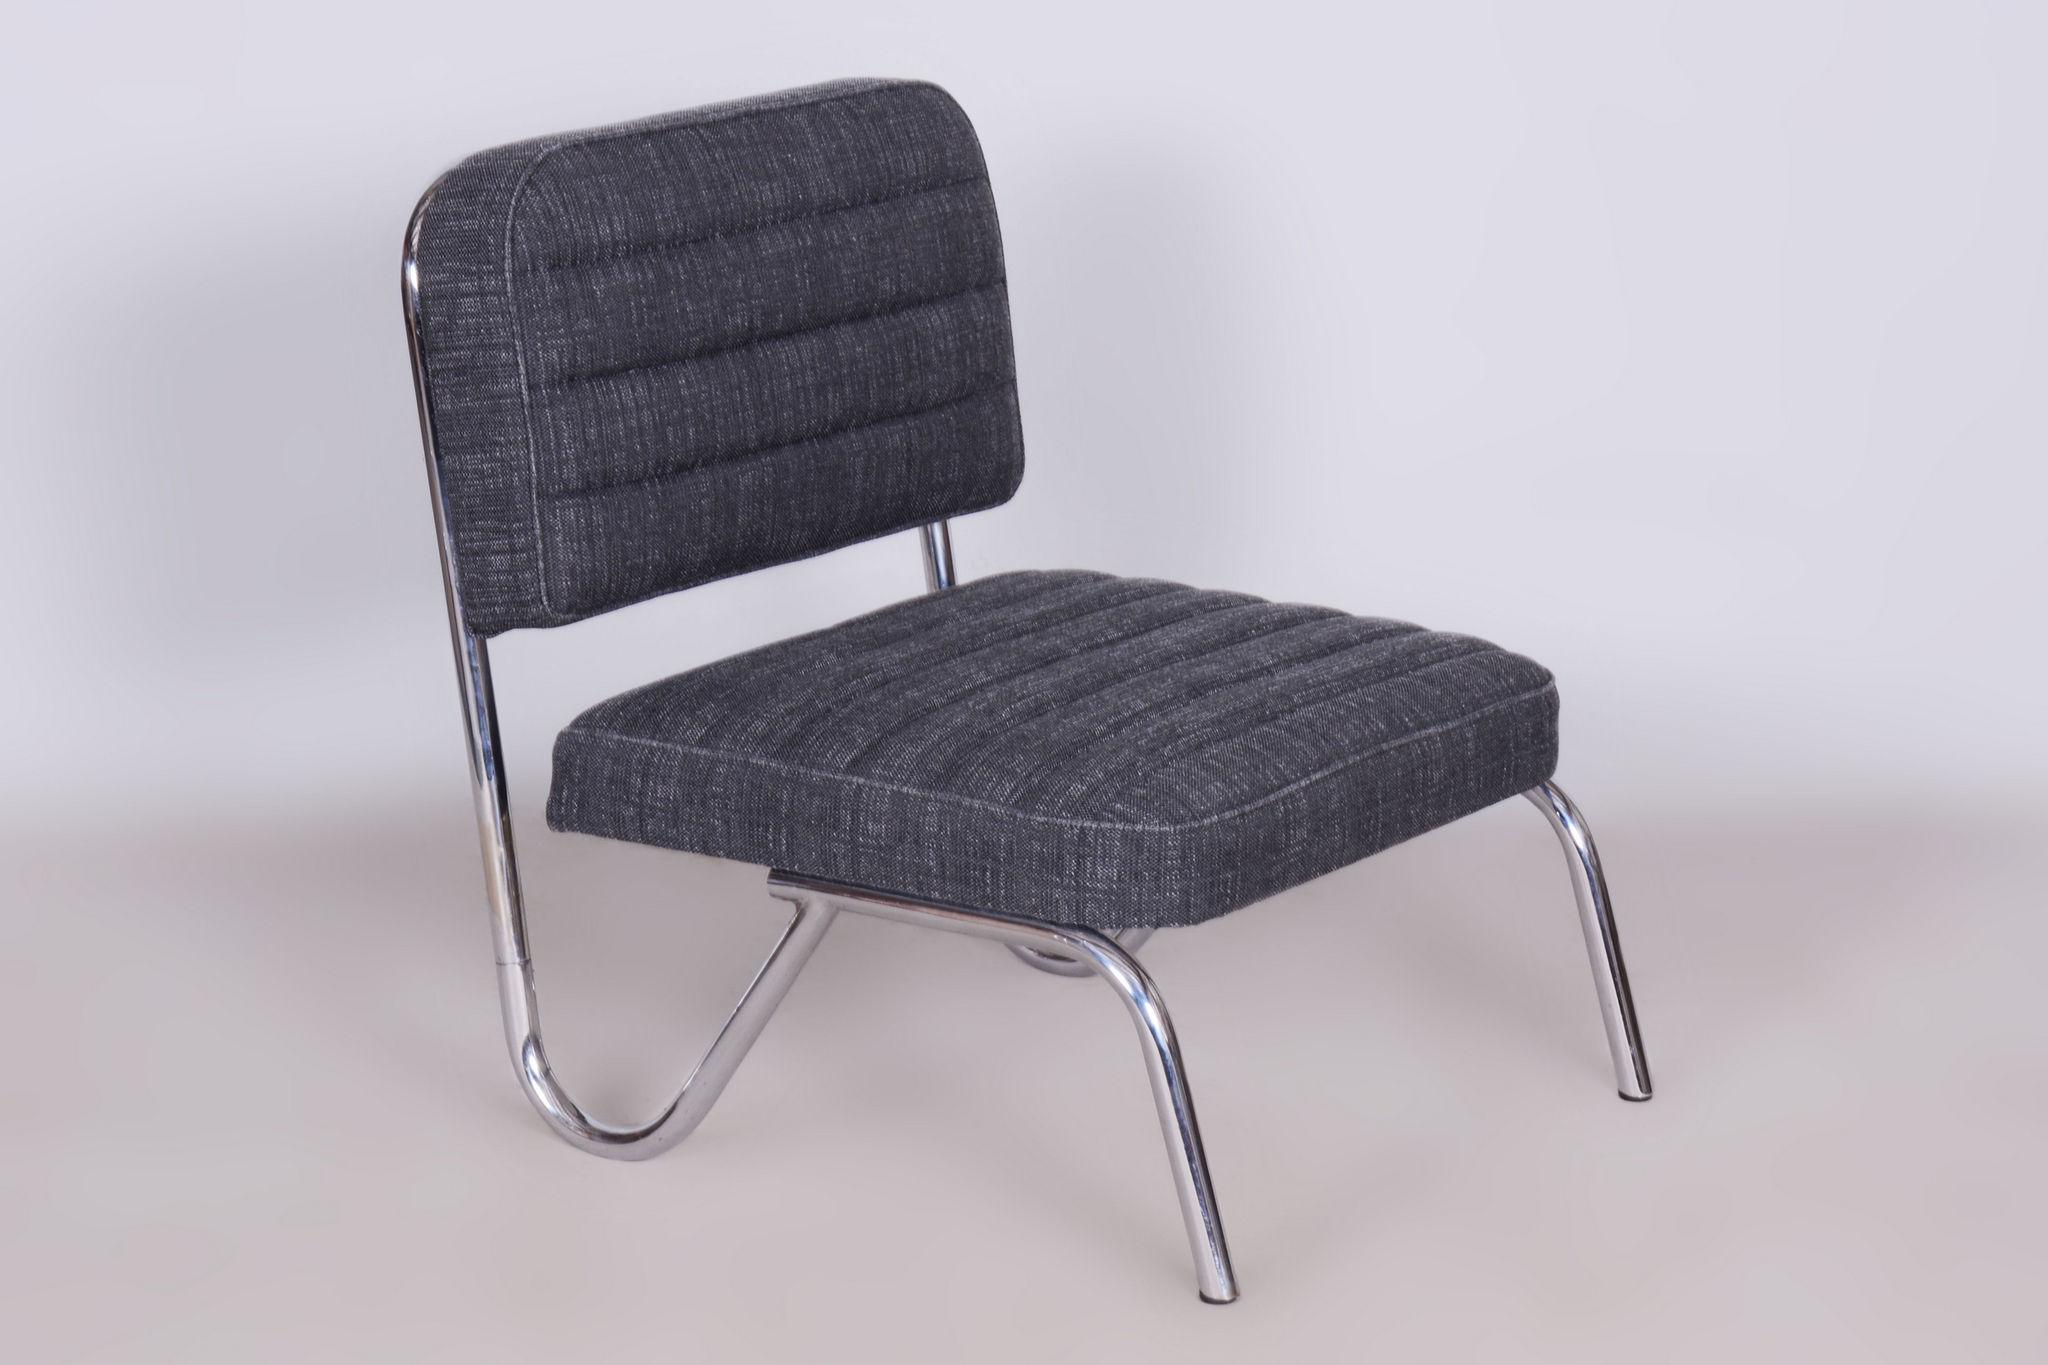 Restored Bauhaus Small Chair Stool, Chrome, Czechia, 1940s For Sale 4